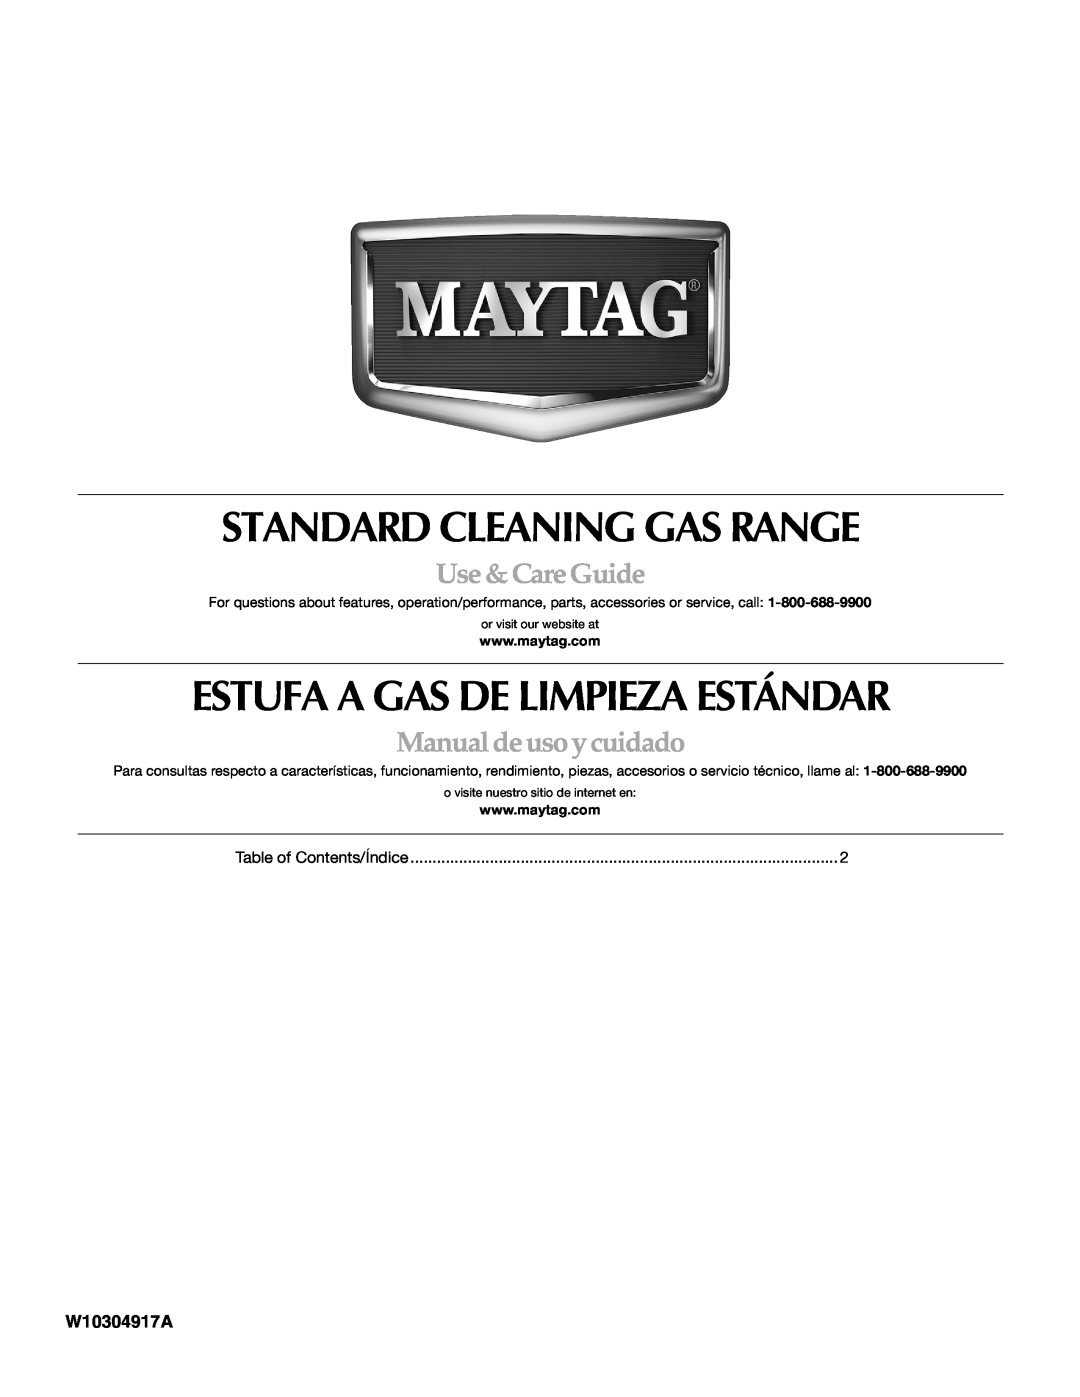 Maytag W10304917A manual Standard Cleaning Gas Range, Estufa A Gas De Limpieza Estándar, Use &CareGuide 